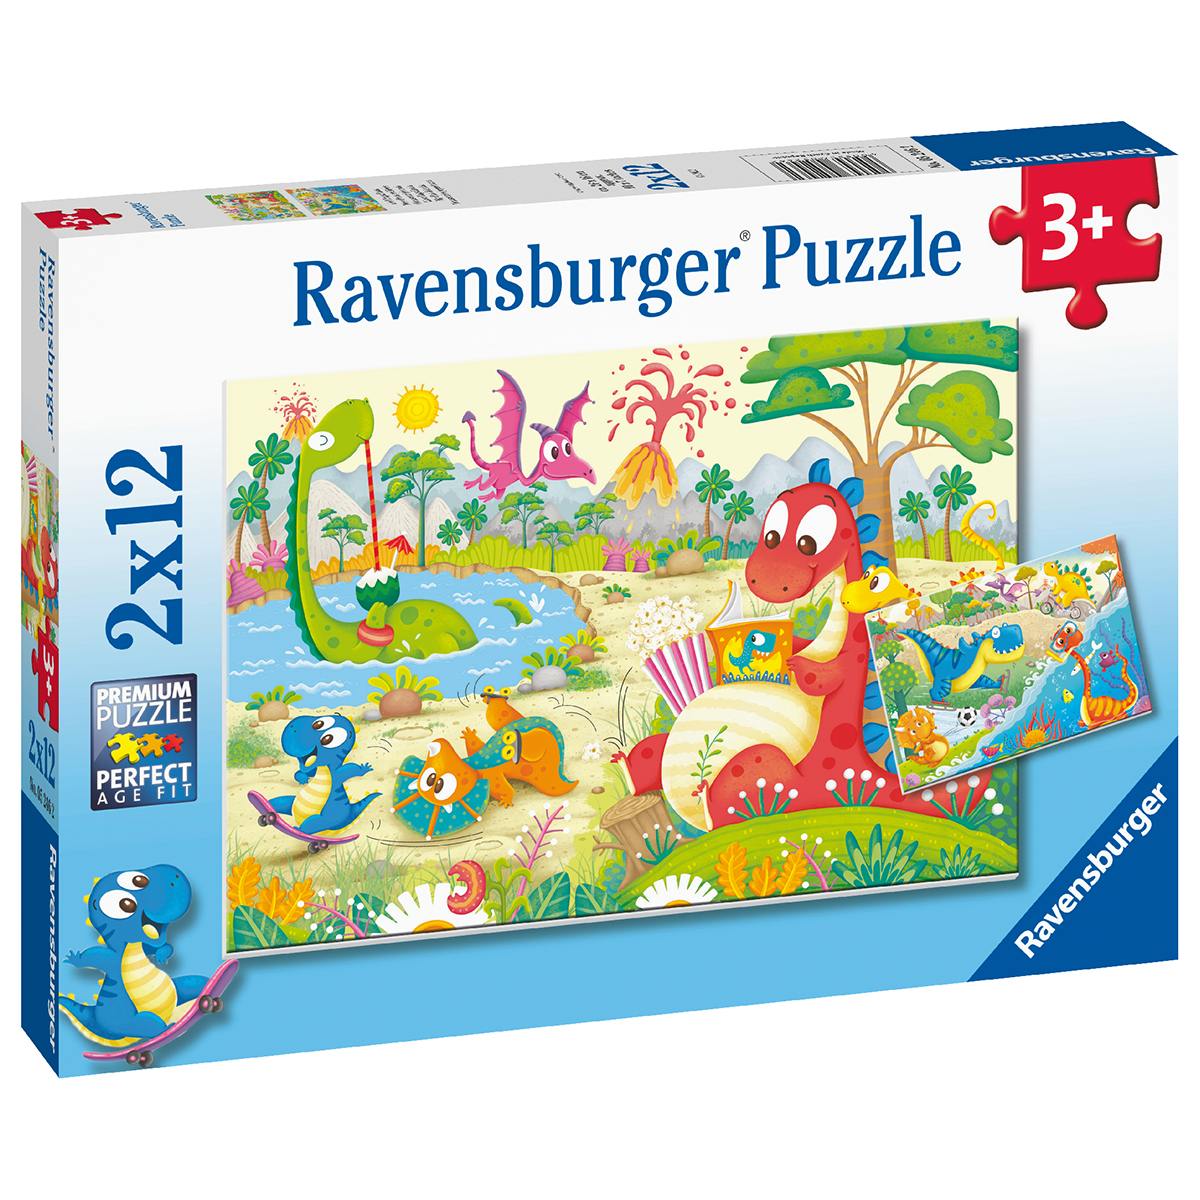 Ravensburger 2 puzzle 12 pezzi per bambini dai 3 anni - dinosauri - RAVENSBURGER